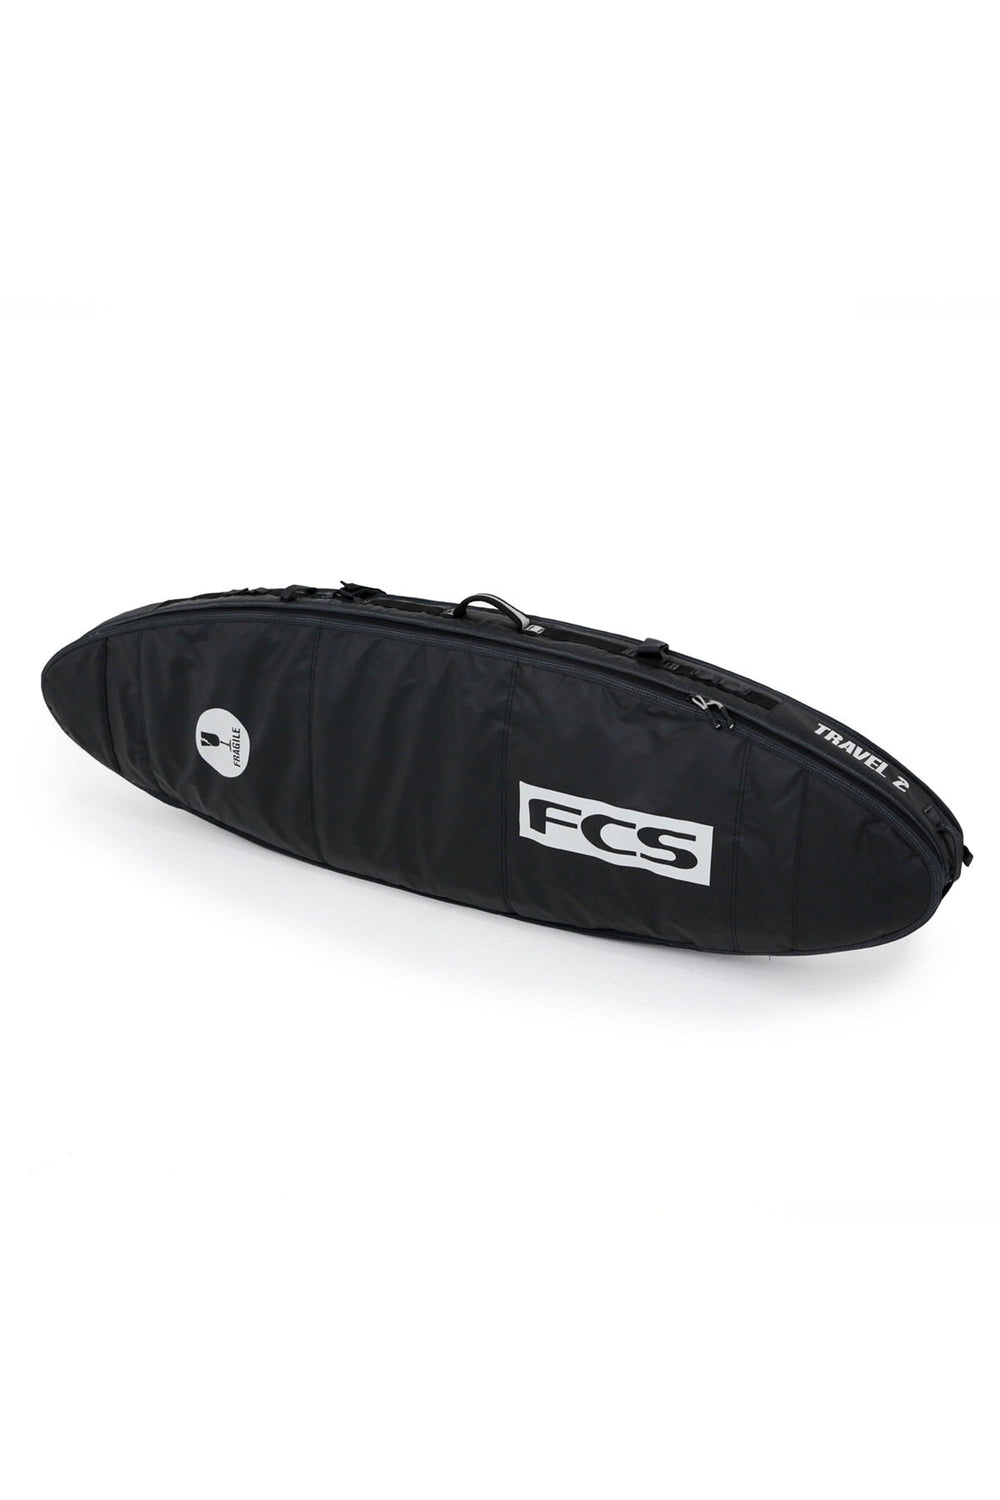 Pukas-Surf-Shop-FCS-Boardbags-Travel-Fun-3-board-Black